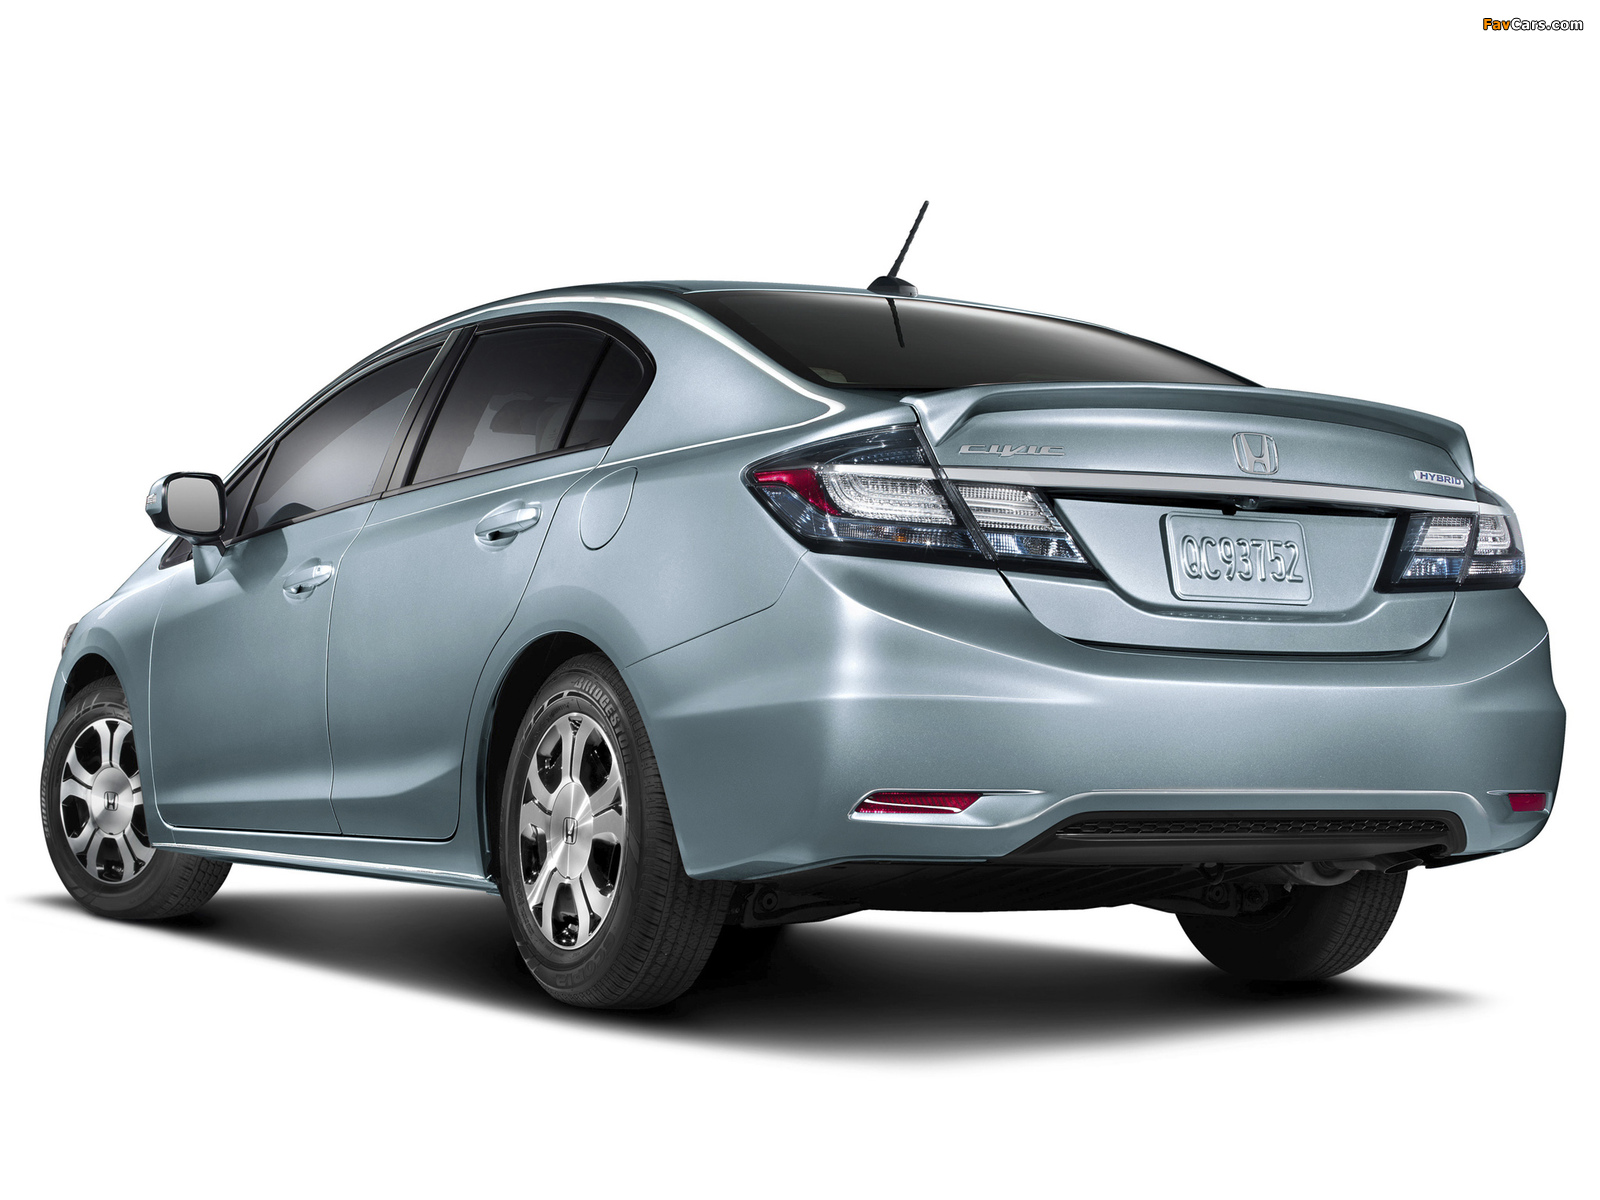 Honda Civic Hybrid 2013 images (1600 x 1200)